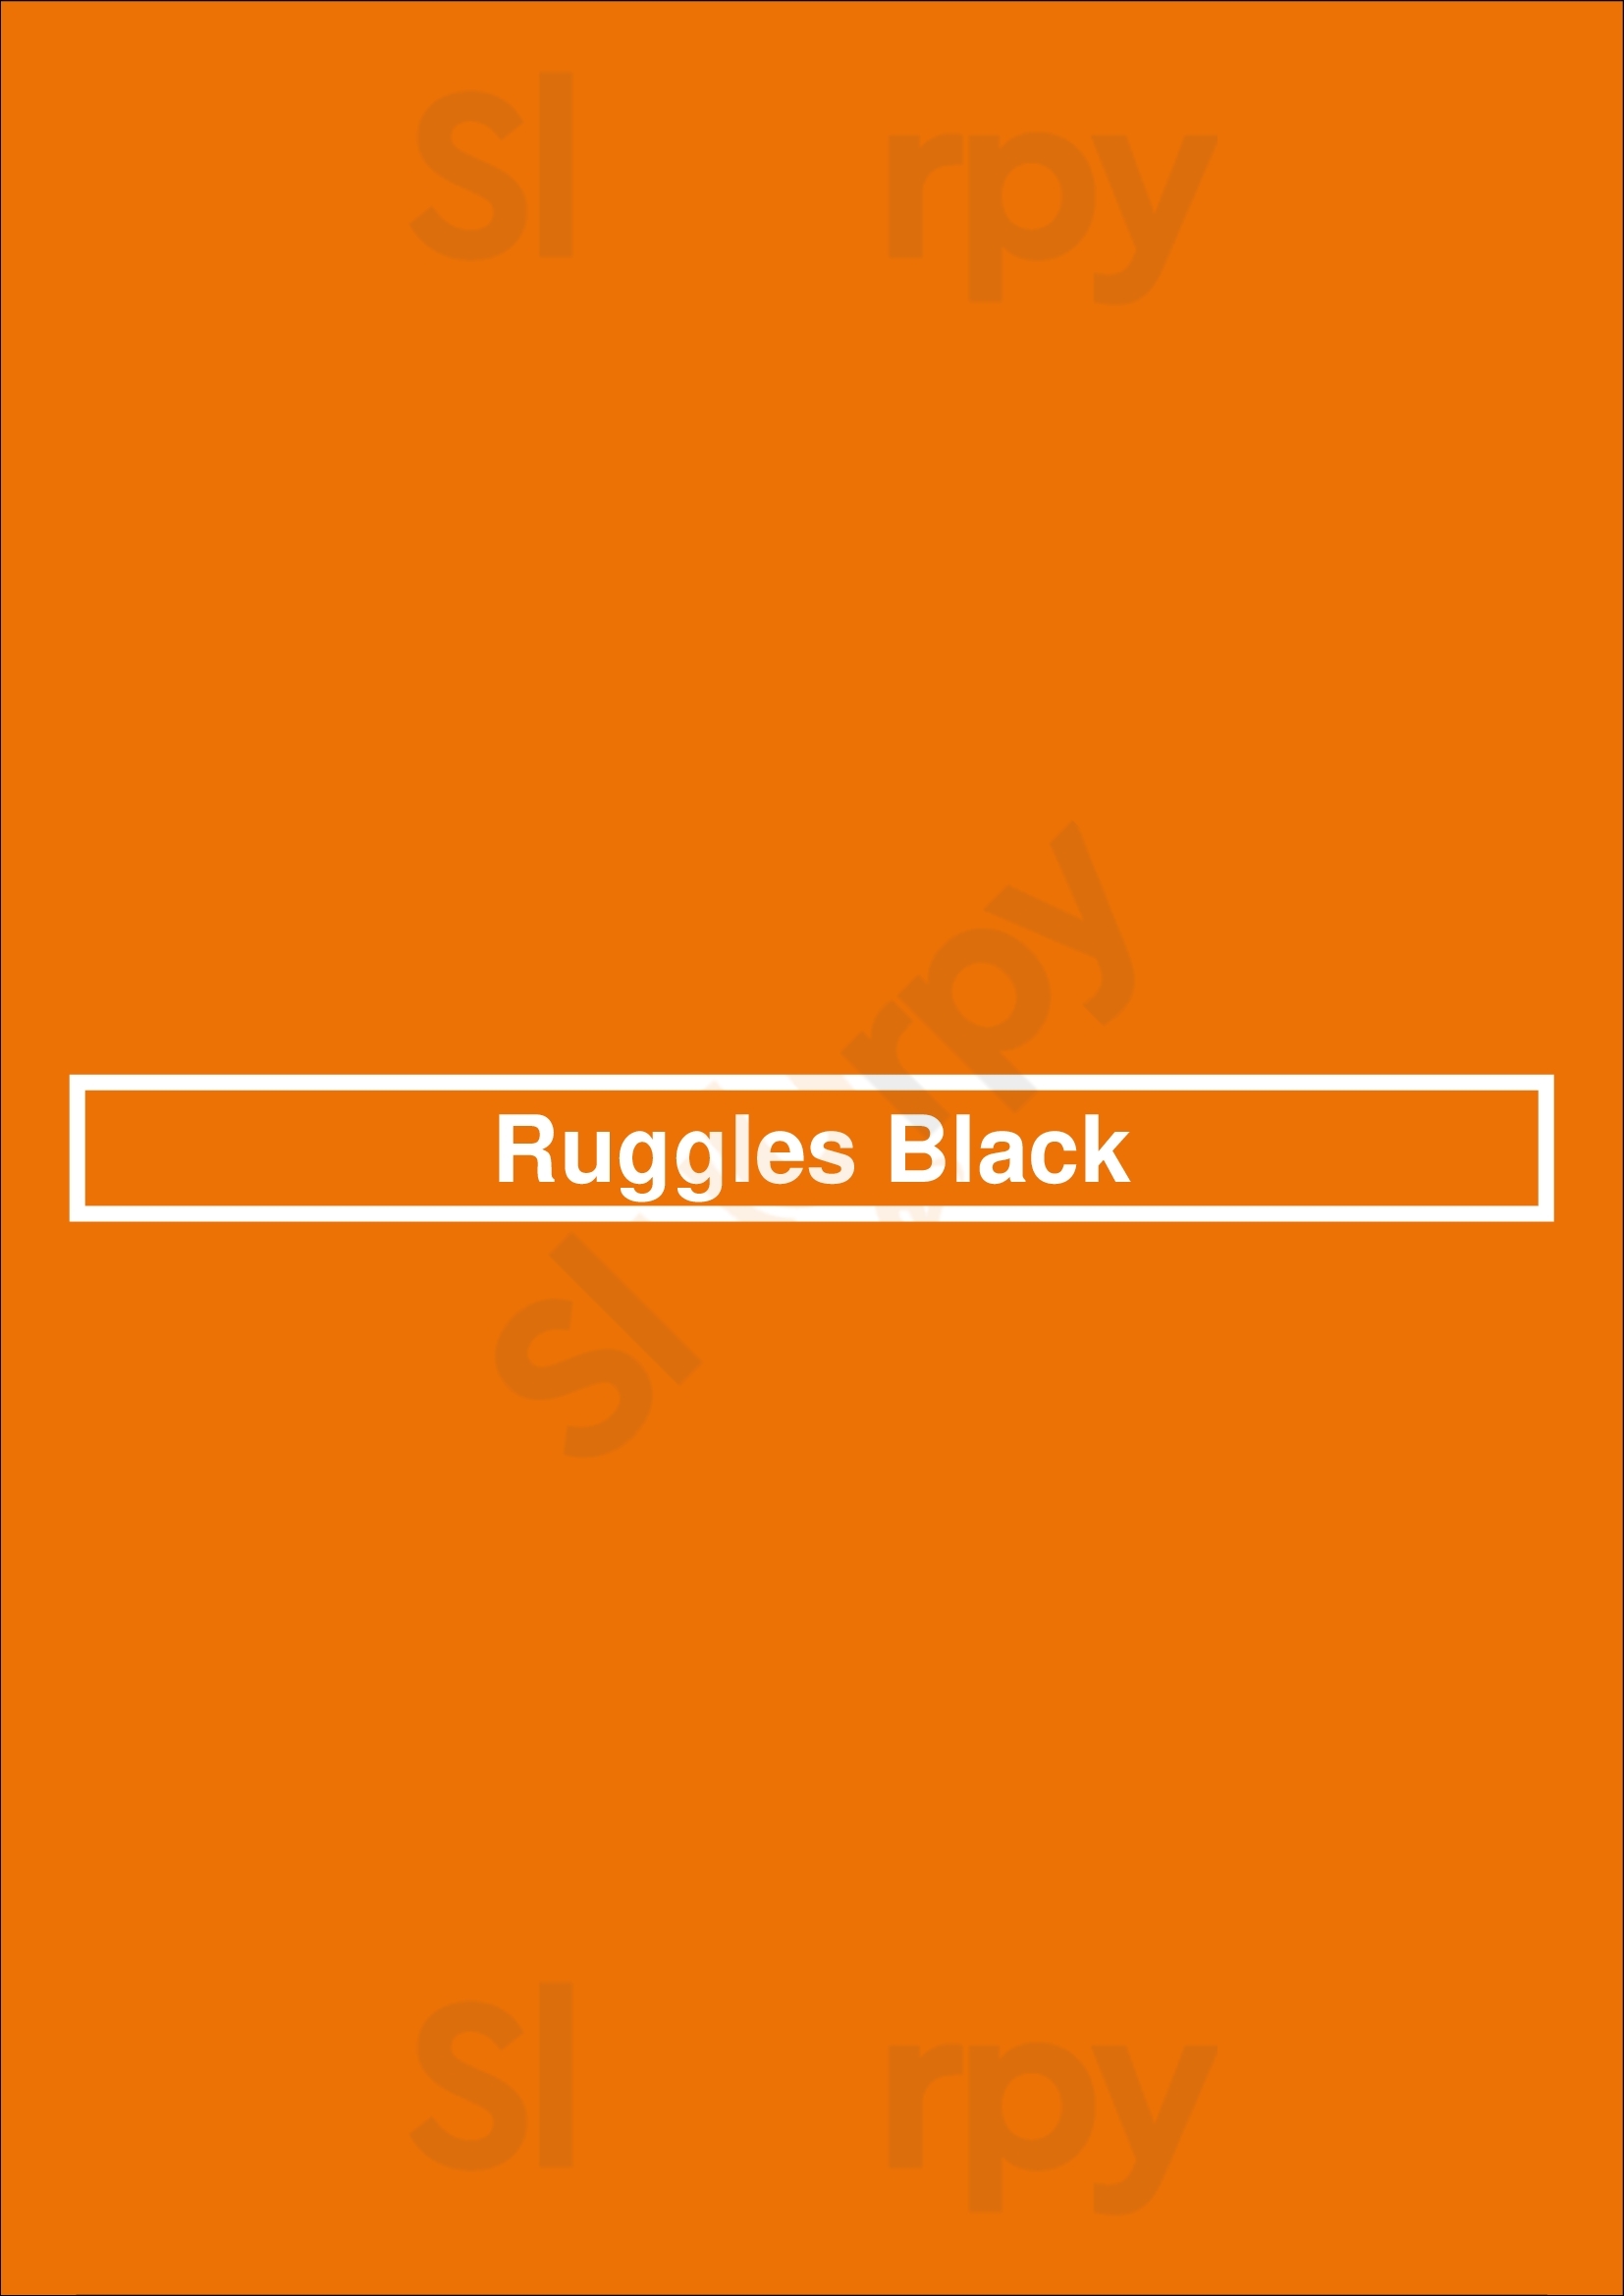 Ruggles Black Houston Menu - 1